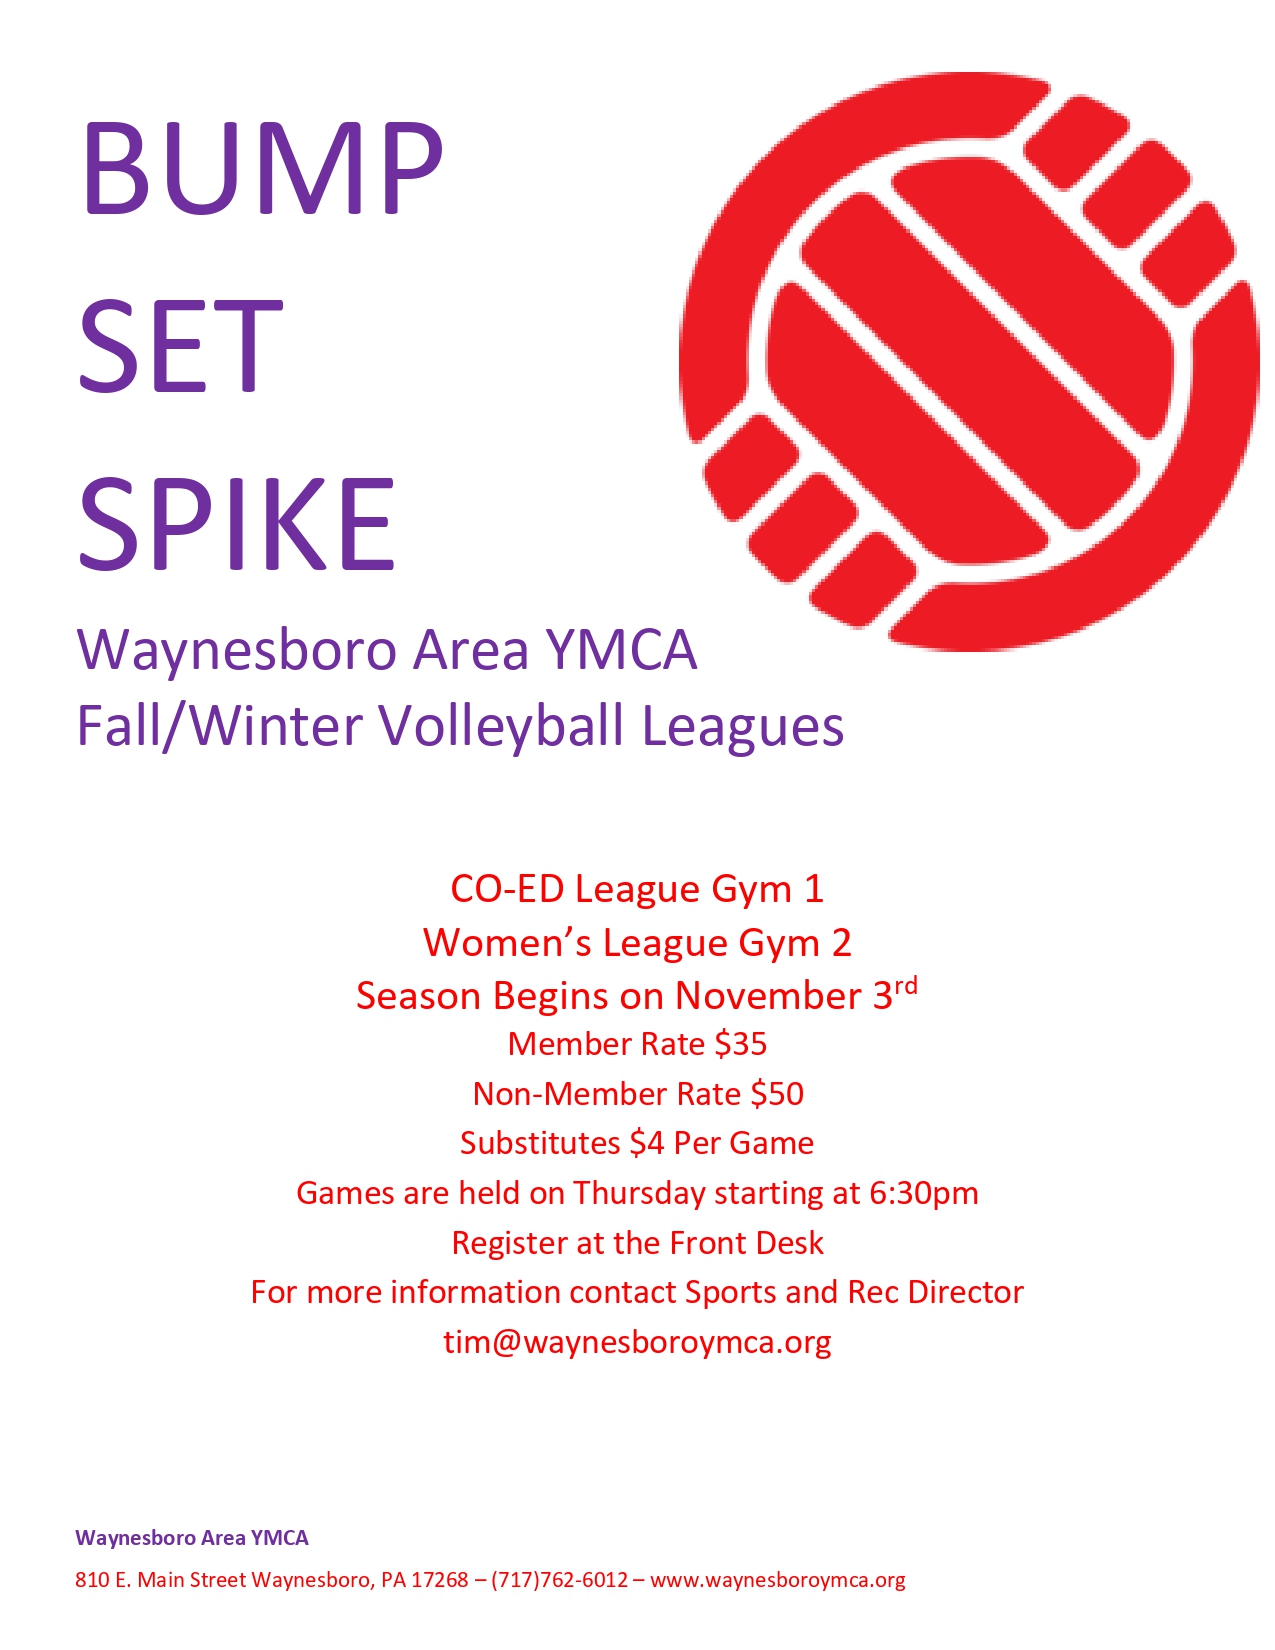 Volleyball Waynesboro YMCA